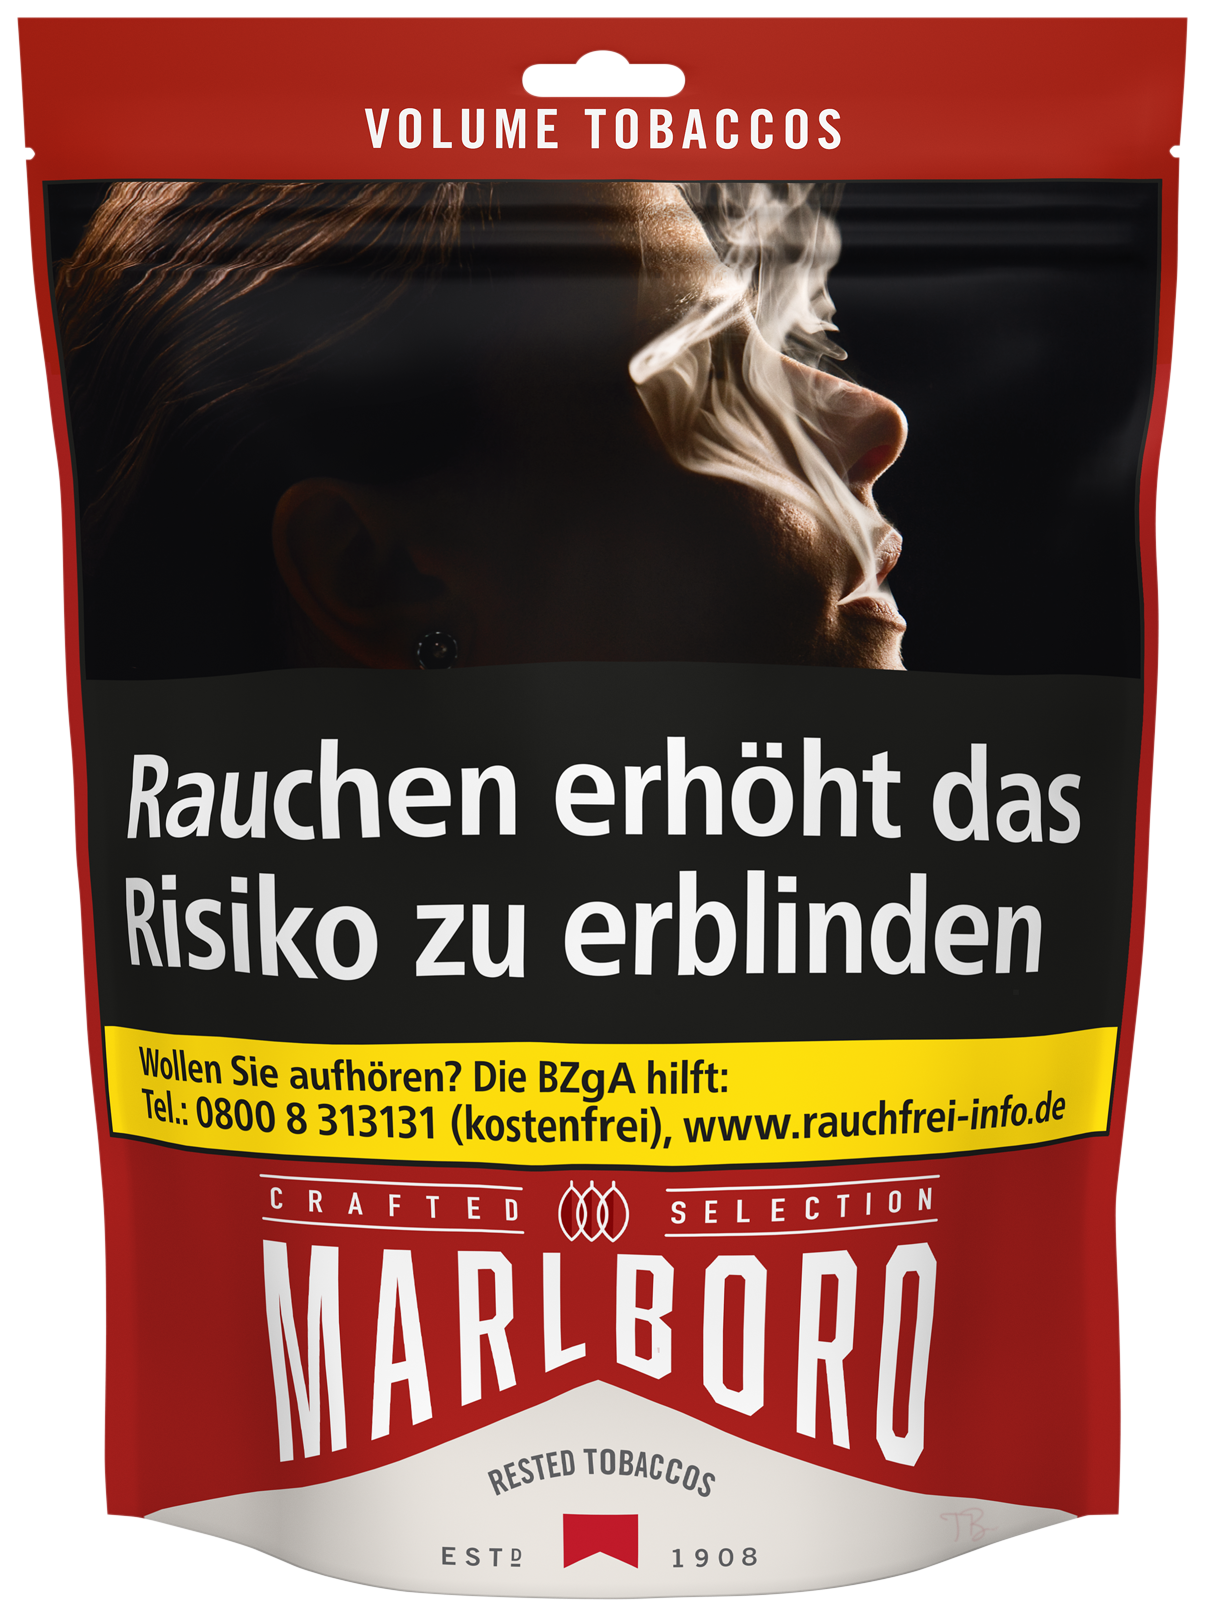 MARLBORO Crafted Selection Tobacco 